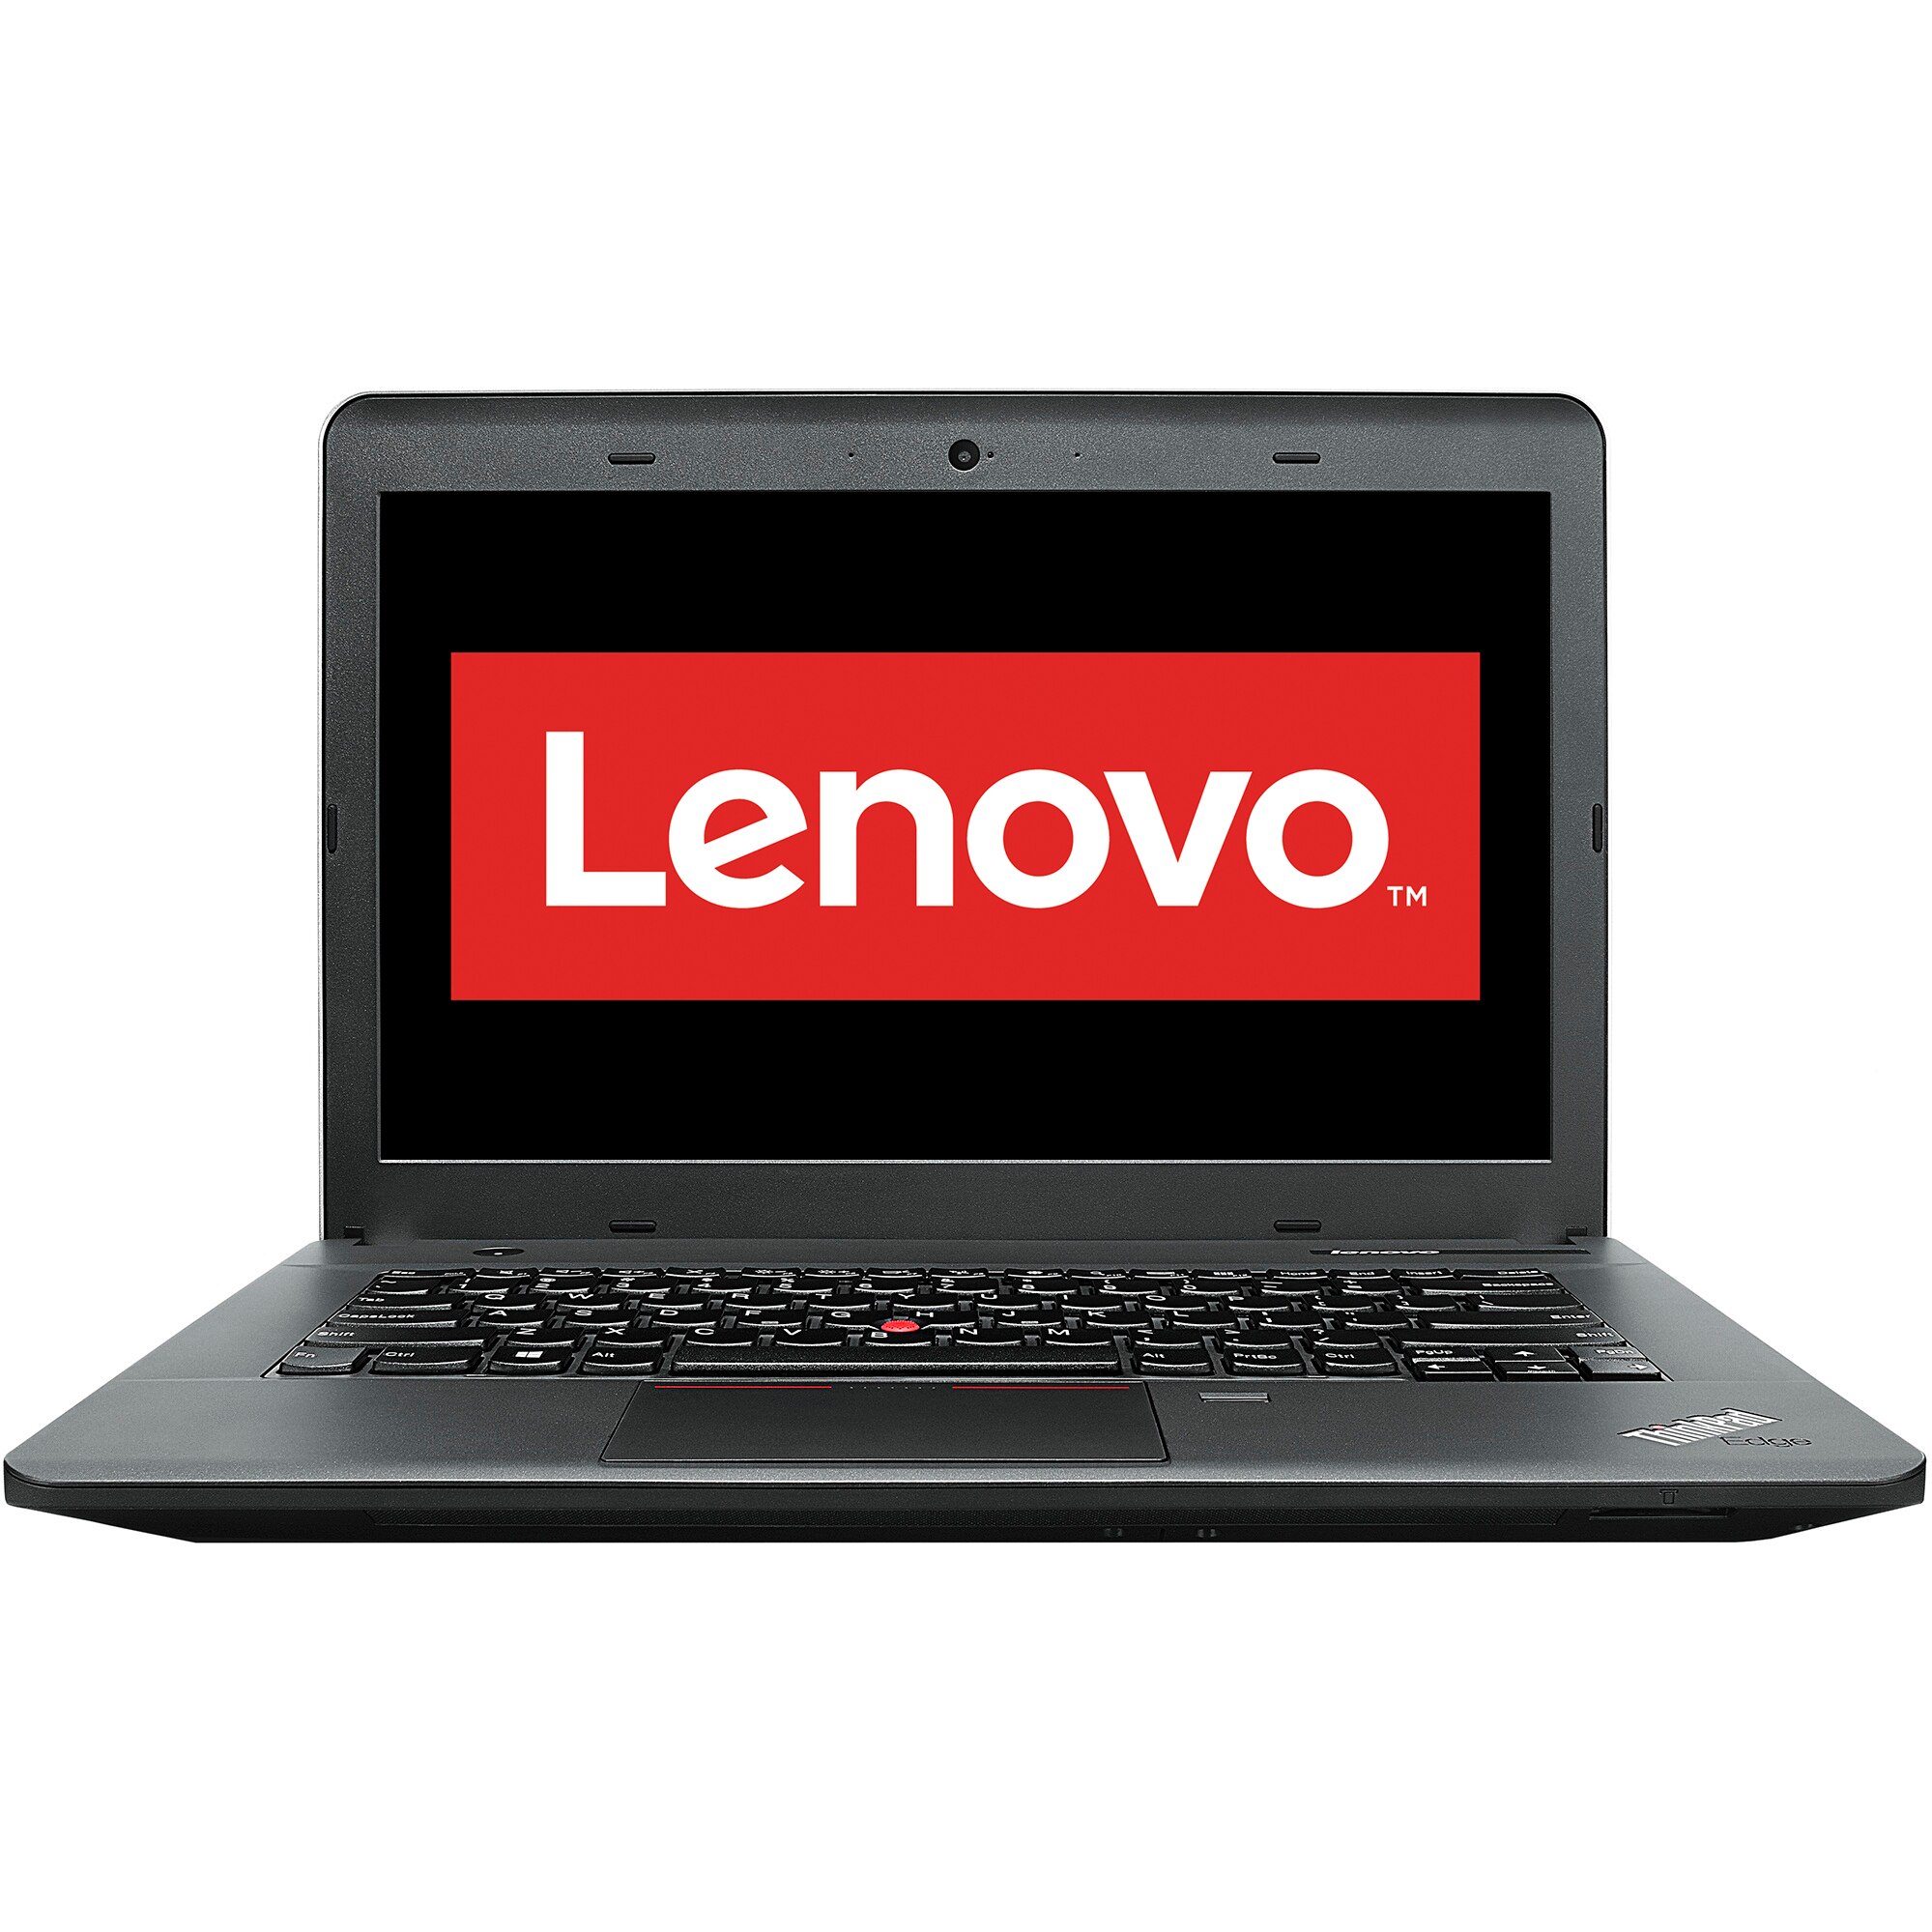 Laptop Lenovo ThinkPad E440, Intel Core i3-4000M 2.40GHz, 4GB DDR3, 500GB SATA, DVD-RW, 14 Inch, Webcam, Grad A-